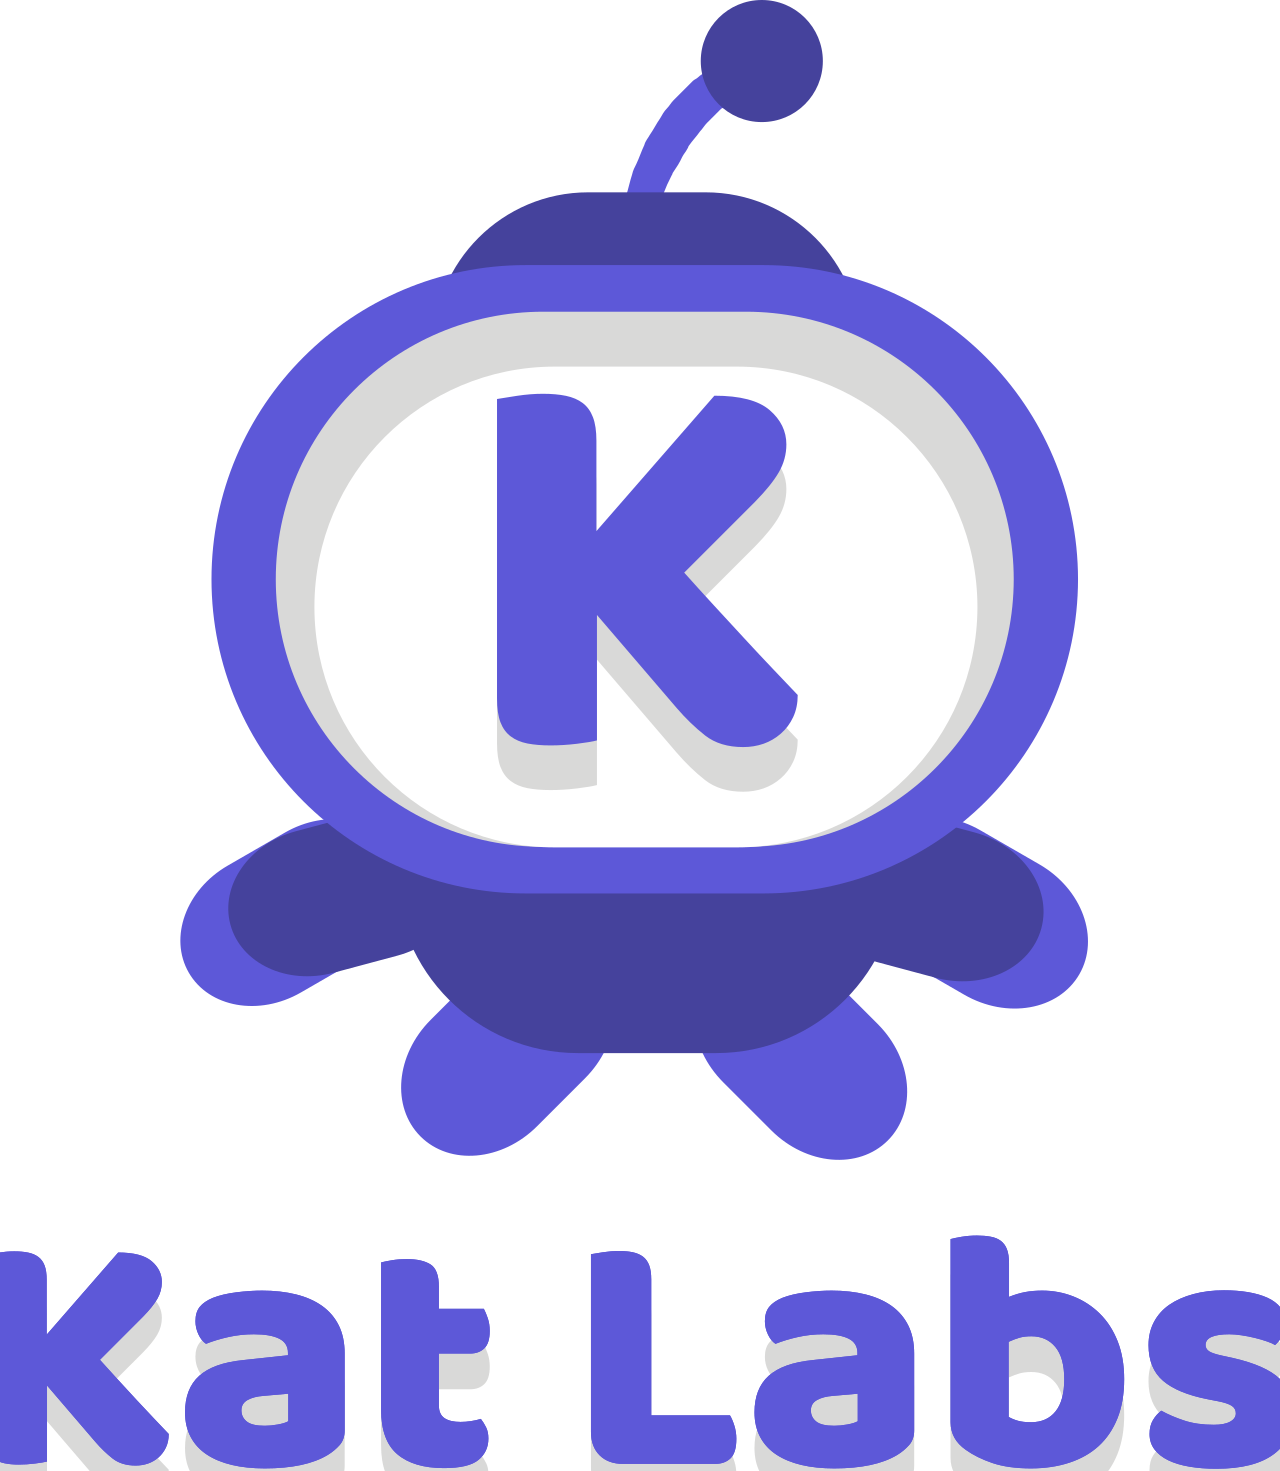 Kat Labs's web page